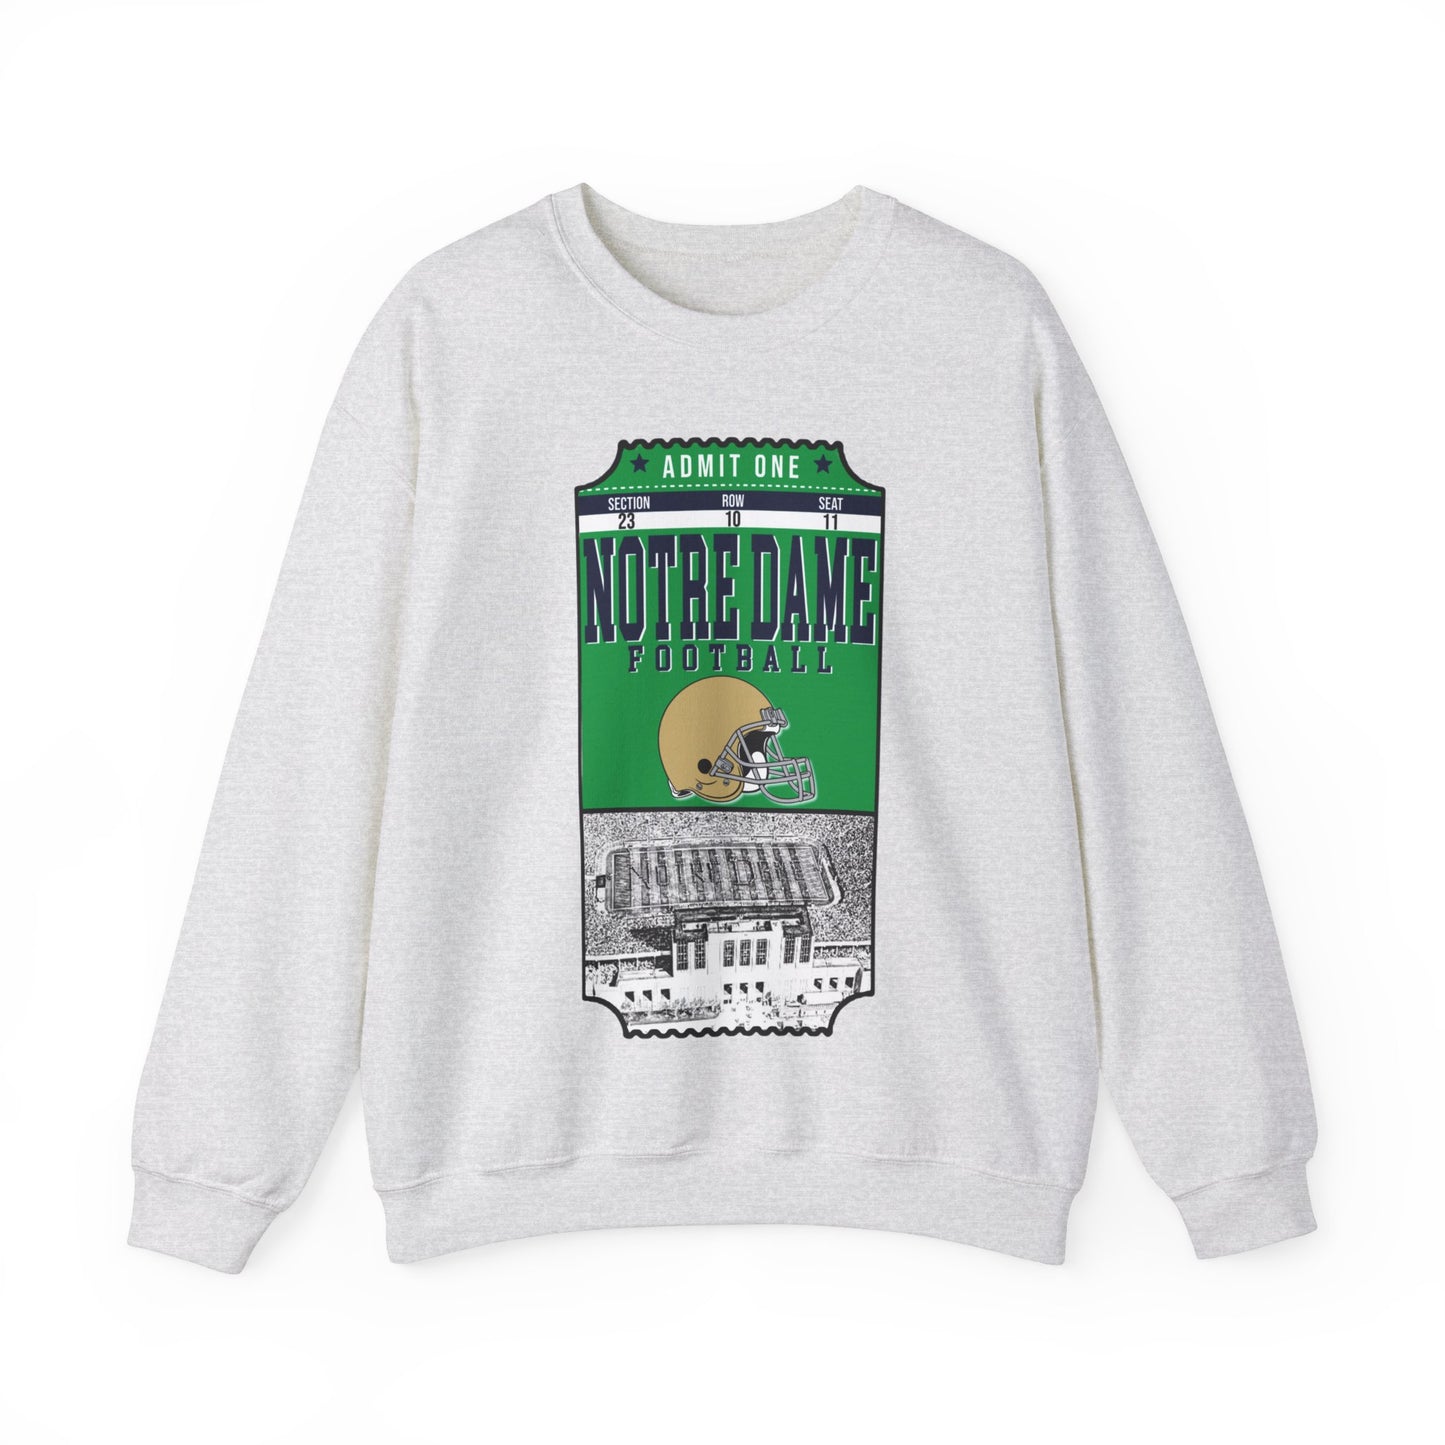 Notre Dame Football Sweatshirt